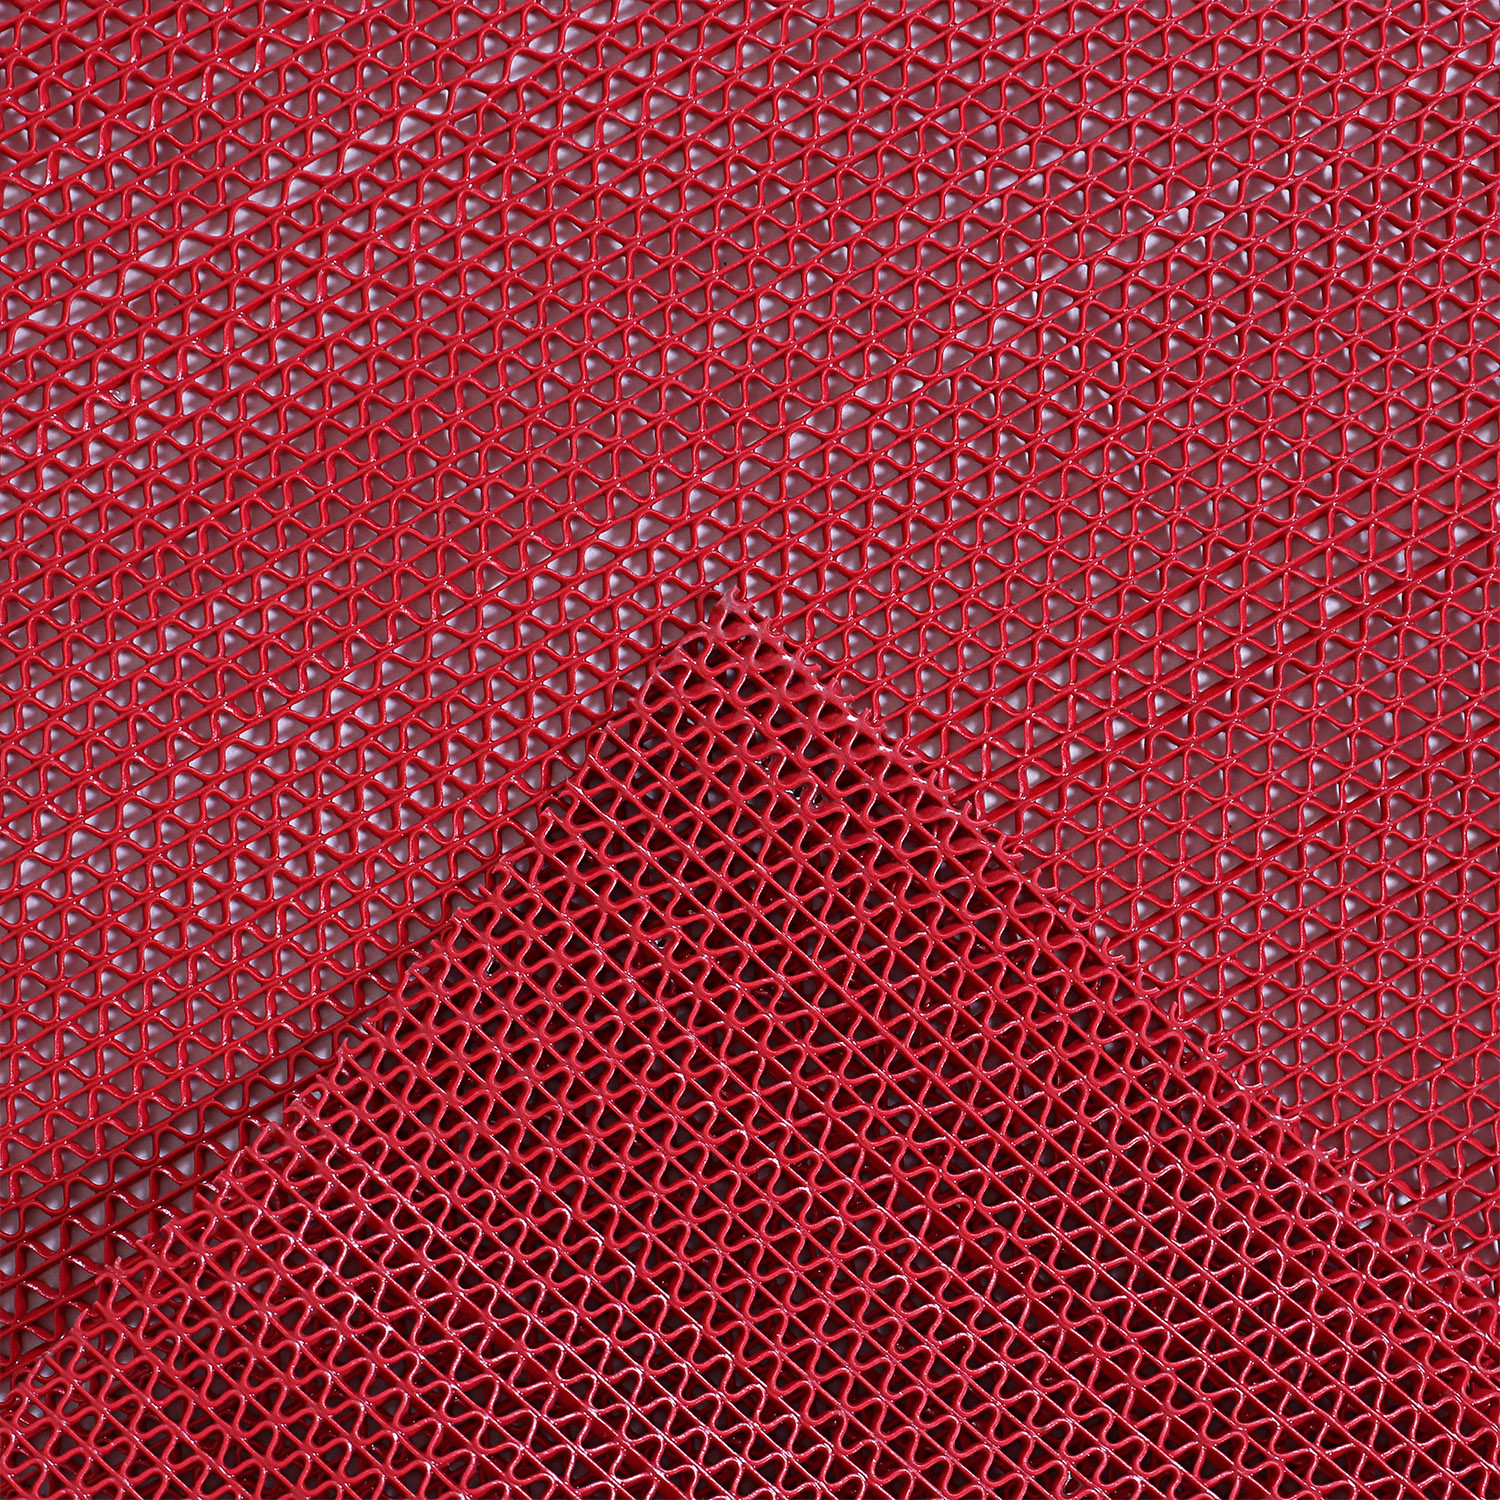 Kuber Industries Rubber Waterproof Anti-Skid Swimming Pool Mat|Shower Mat|Rainmat For Entrance Area,Bathroom,2 x 8 Feet (Red)